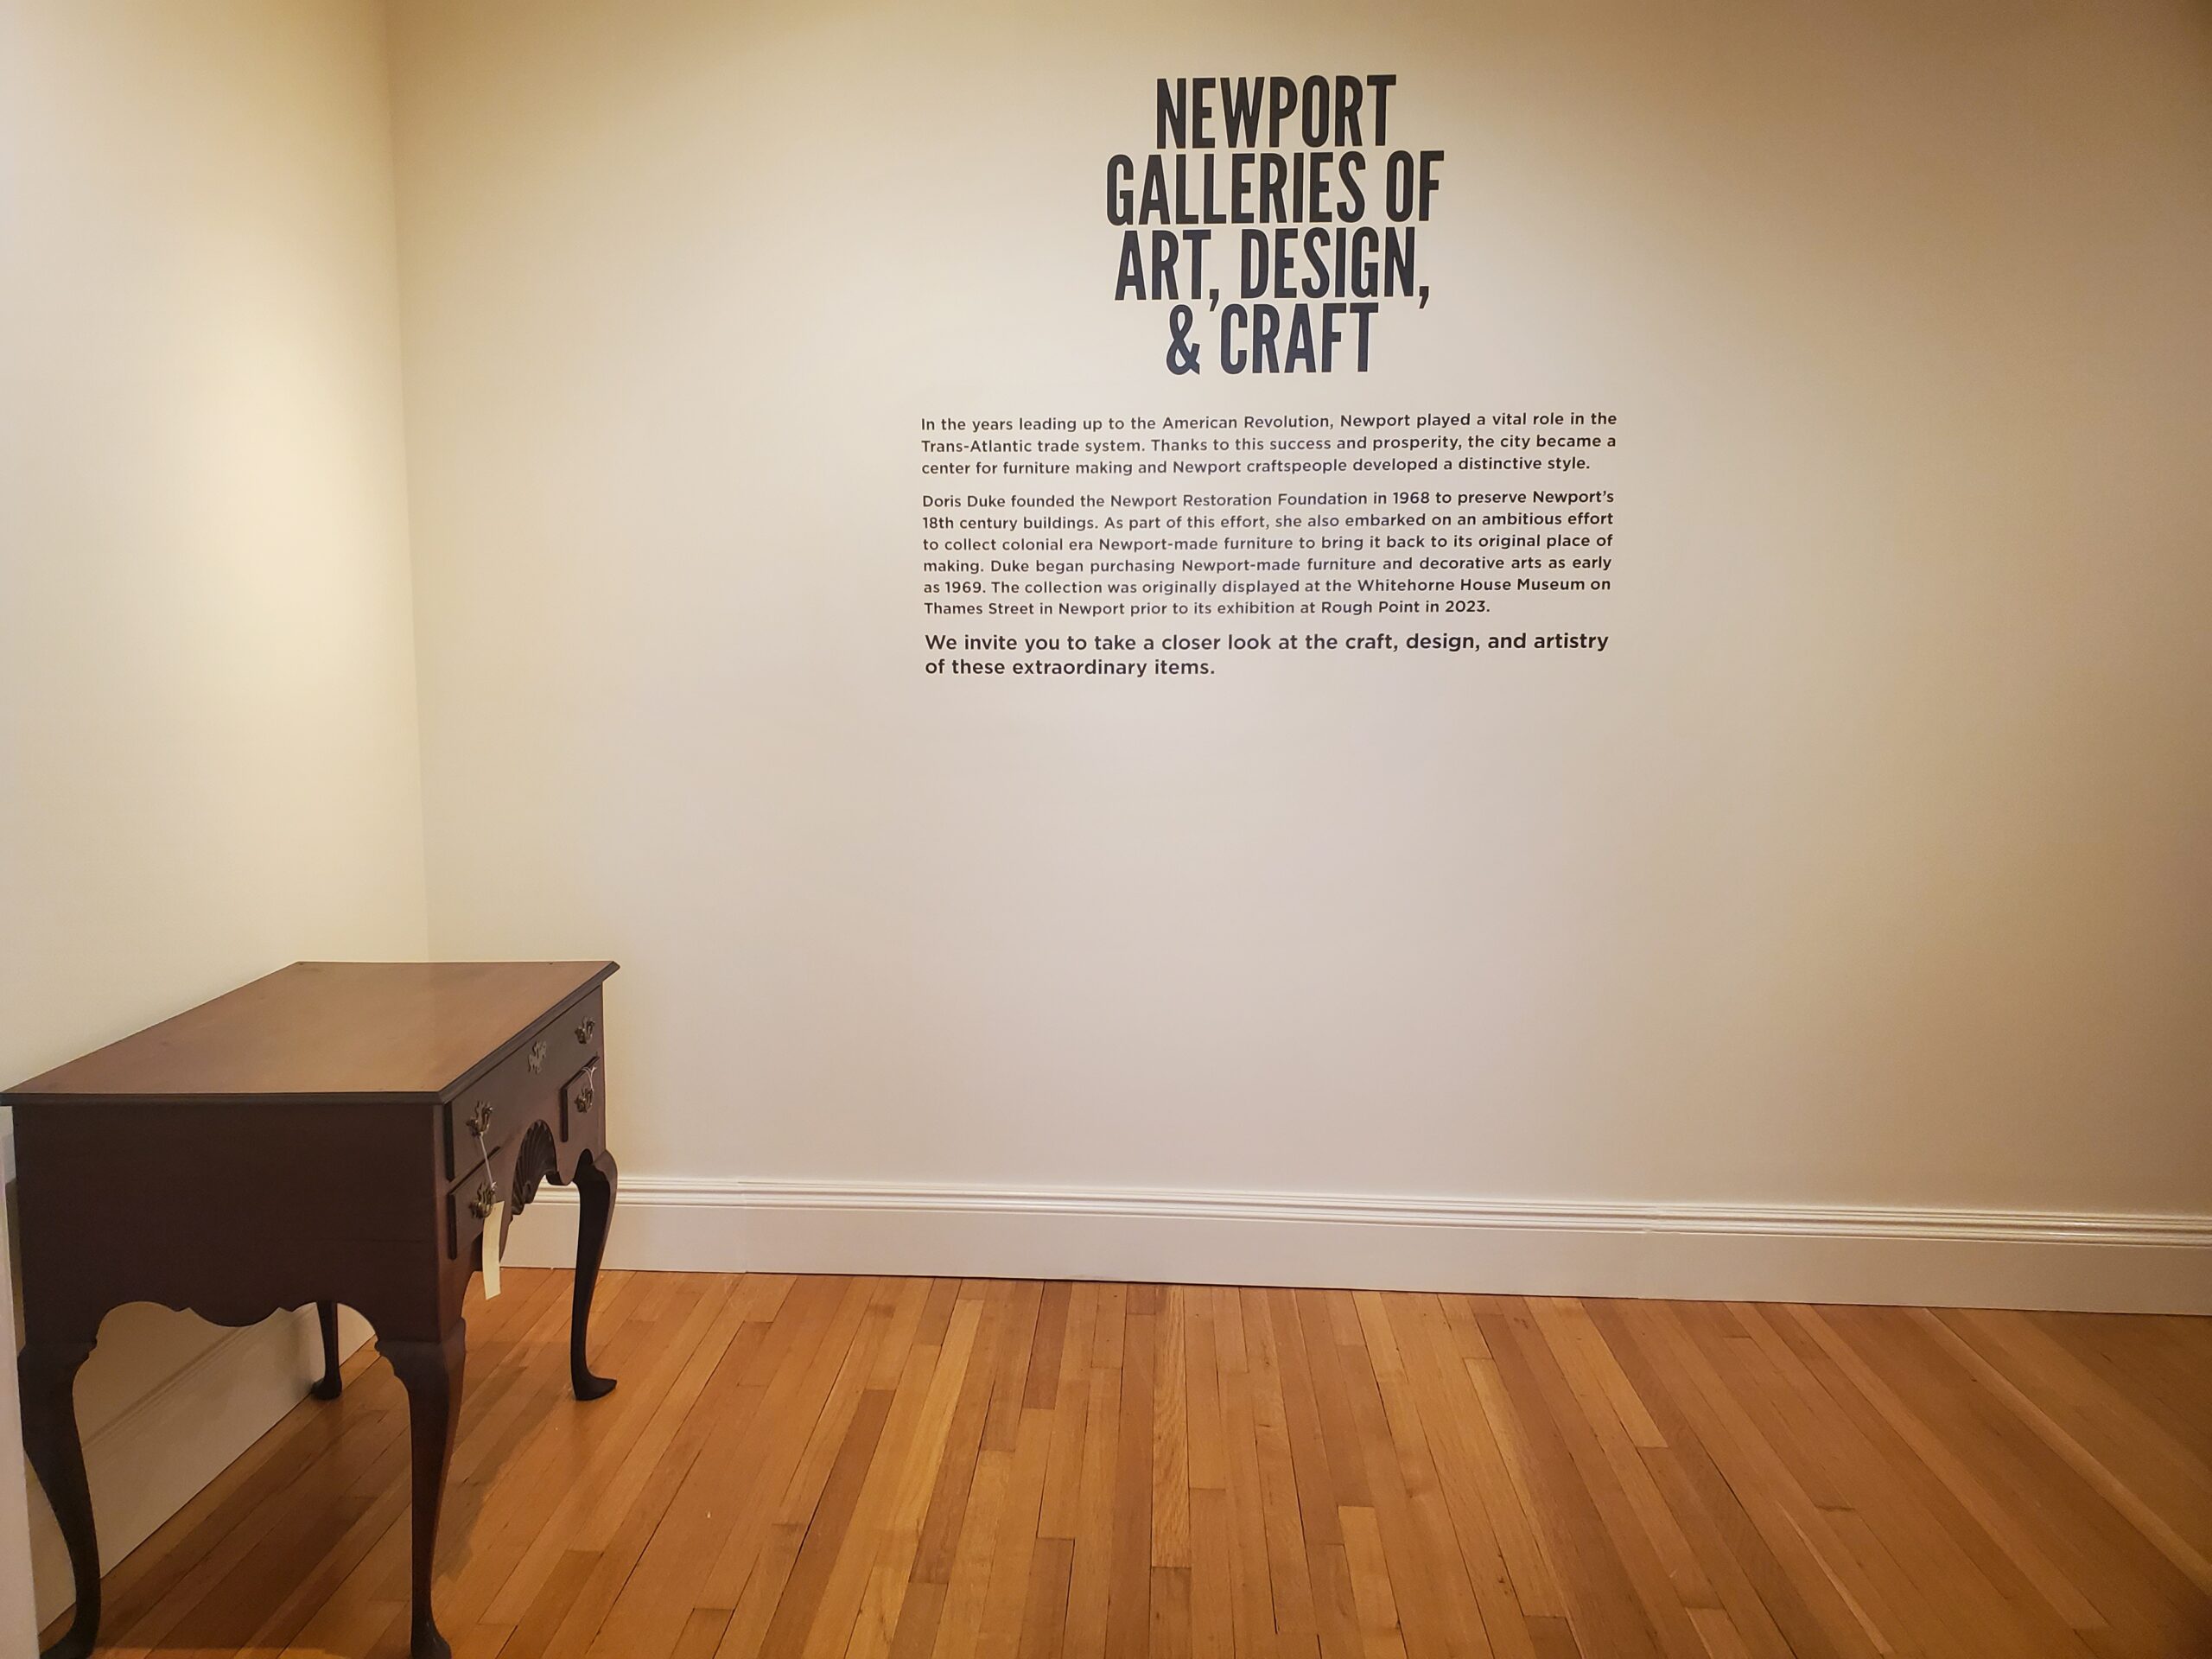 "Newport Galleries of Art, Design, & Craft" introduction sign